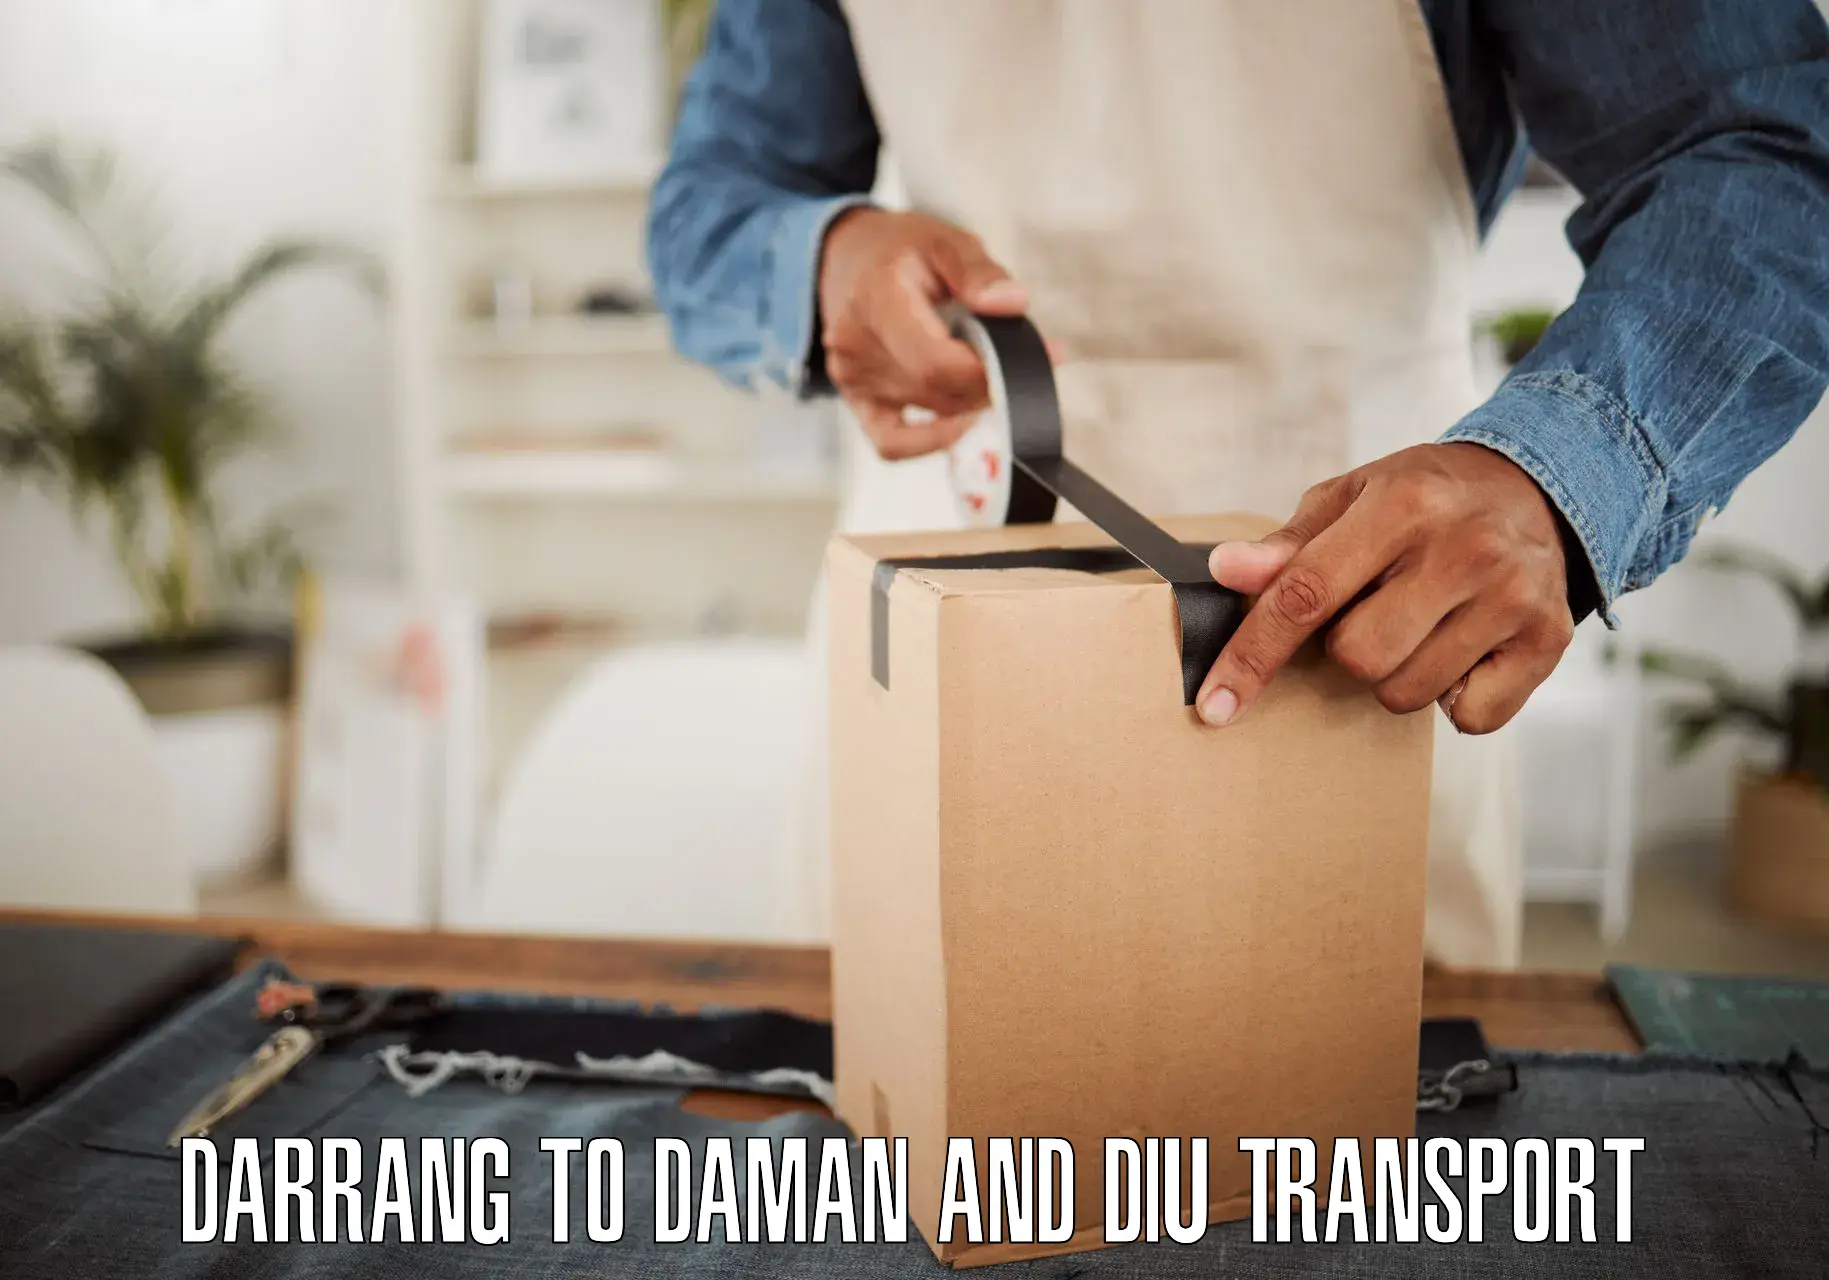 Transport in sharing Darrang to Diu